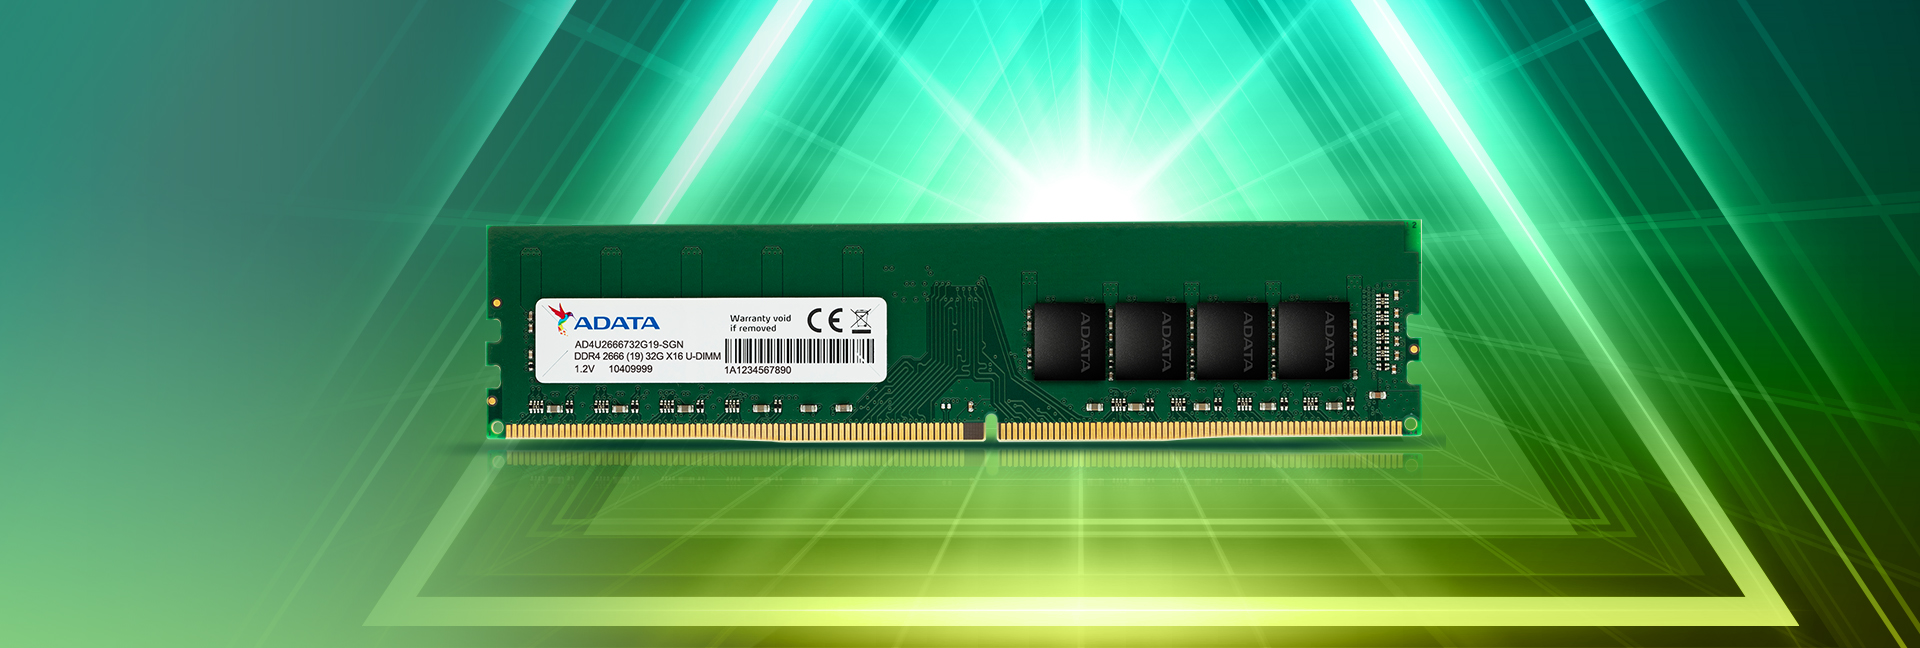 ADATA Launches Premier DDR4 2133 SO-DIMM Memory - Legit Reviews